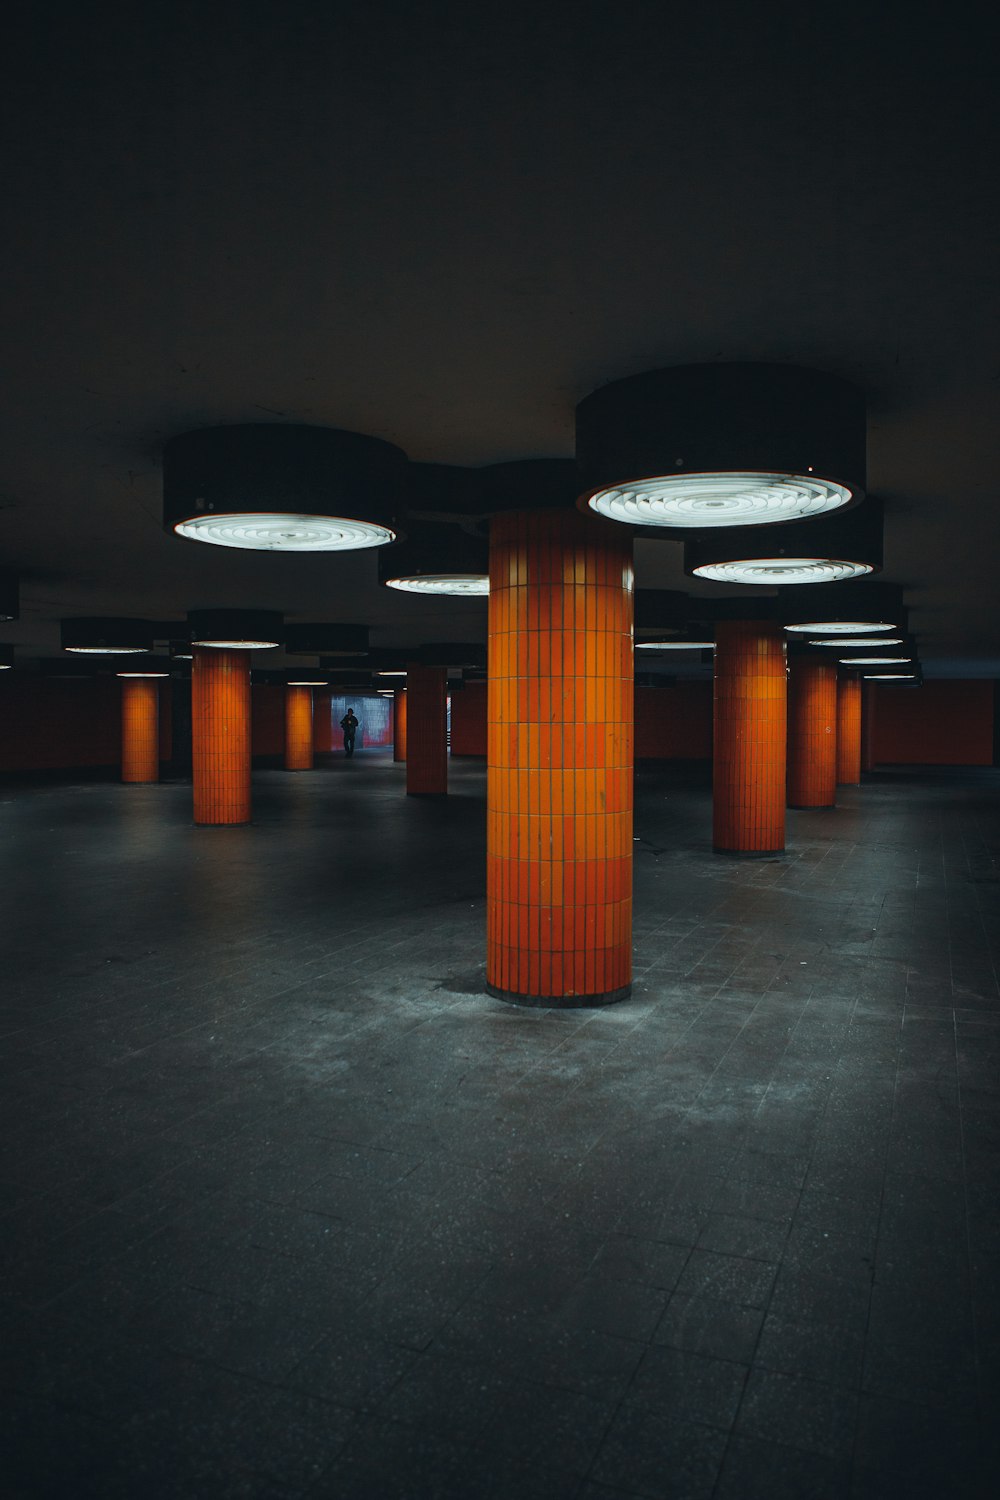 Un gruppo di pilastri in una stanza buia